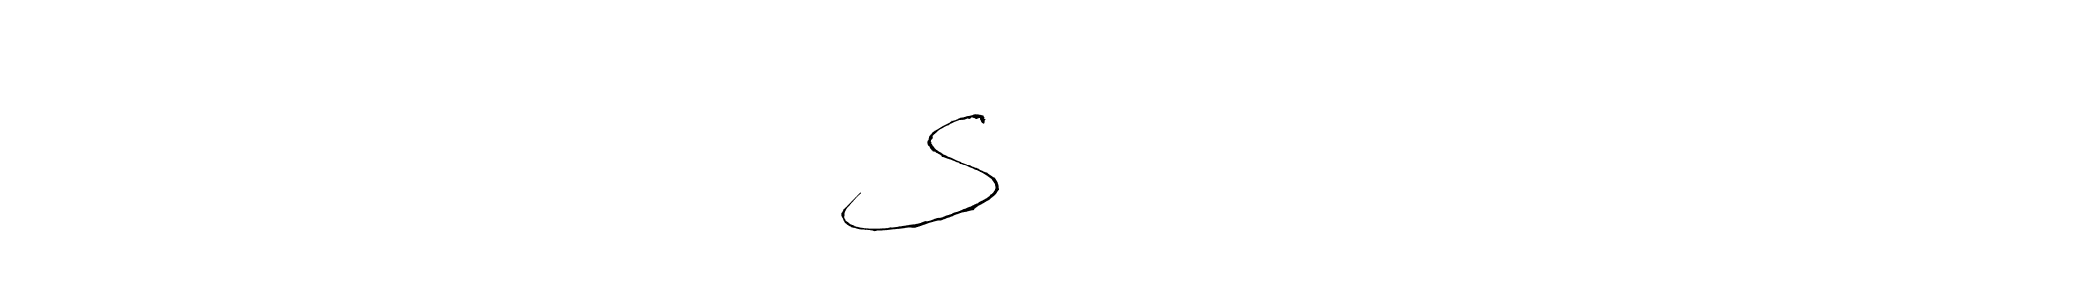 How to Draw Sͥᴜᴋᴜɴͣᴀͫ signature style? Antro_Vectra is a latest design signature styles for name Sͥᴜᴋᴜɴͣᴀͫ. Sͥᴜᴋᴜɴͣᴀͫ signature style 6 images and pictures png